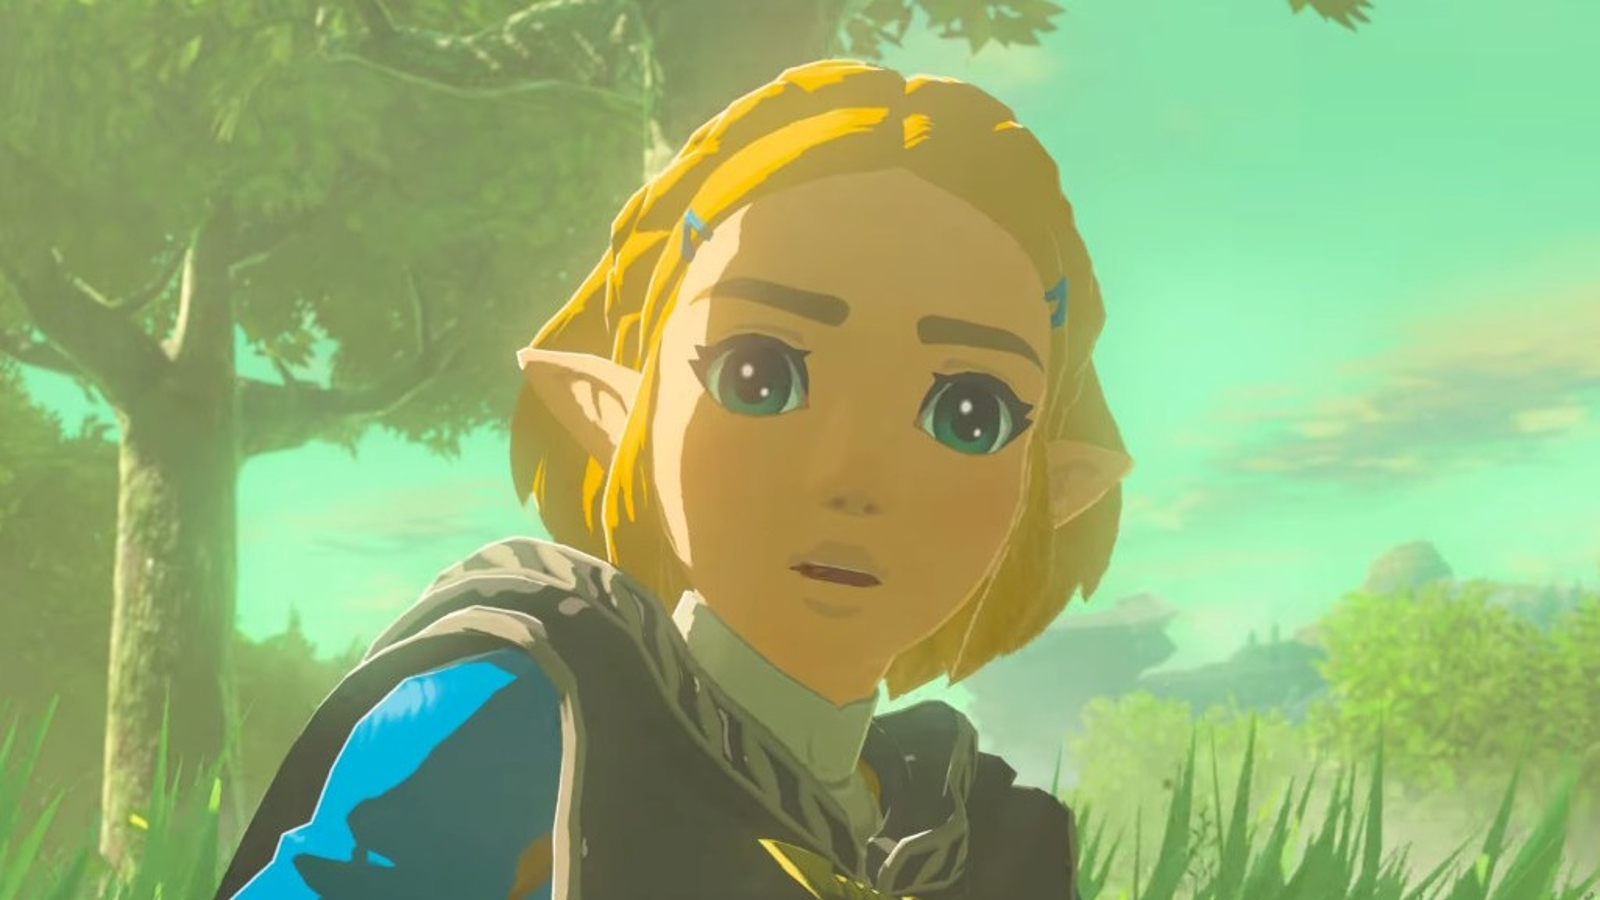 Zelda movie director says he's planning a 'live action Miyazaki' film